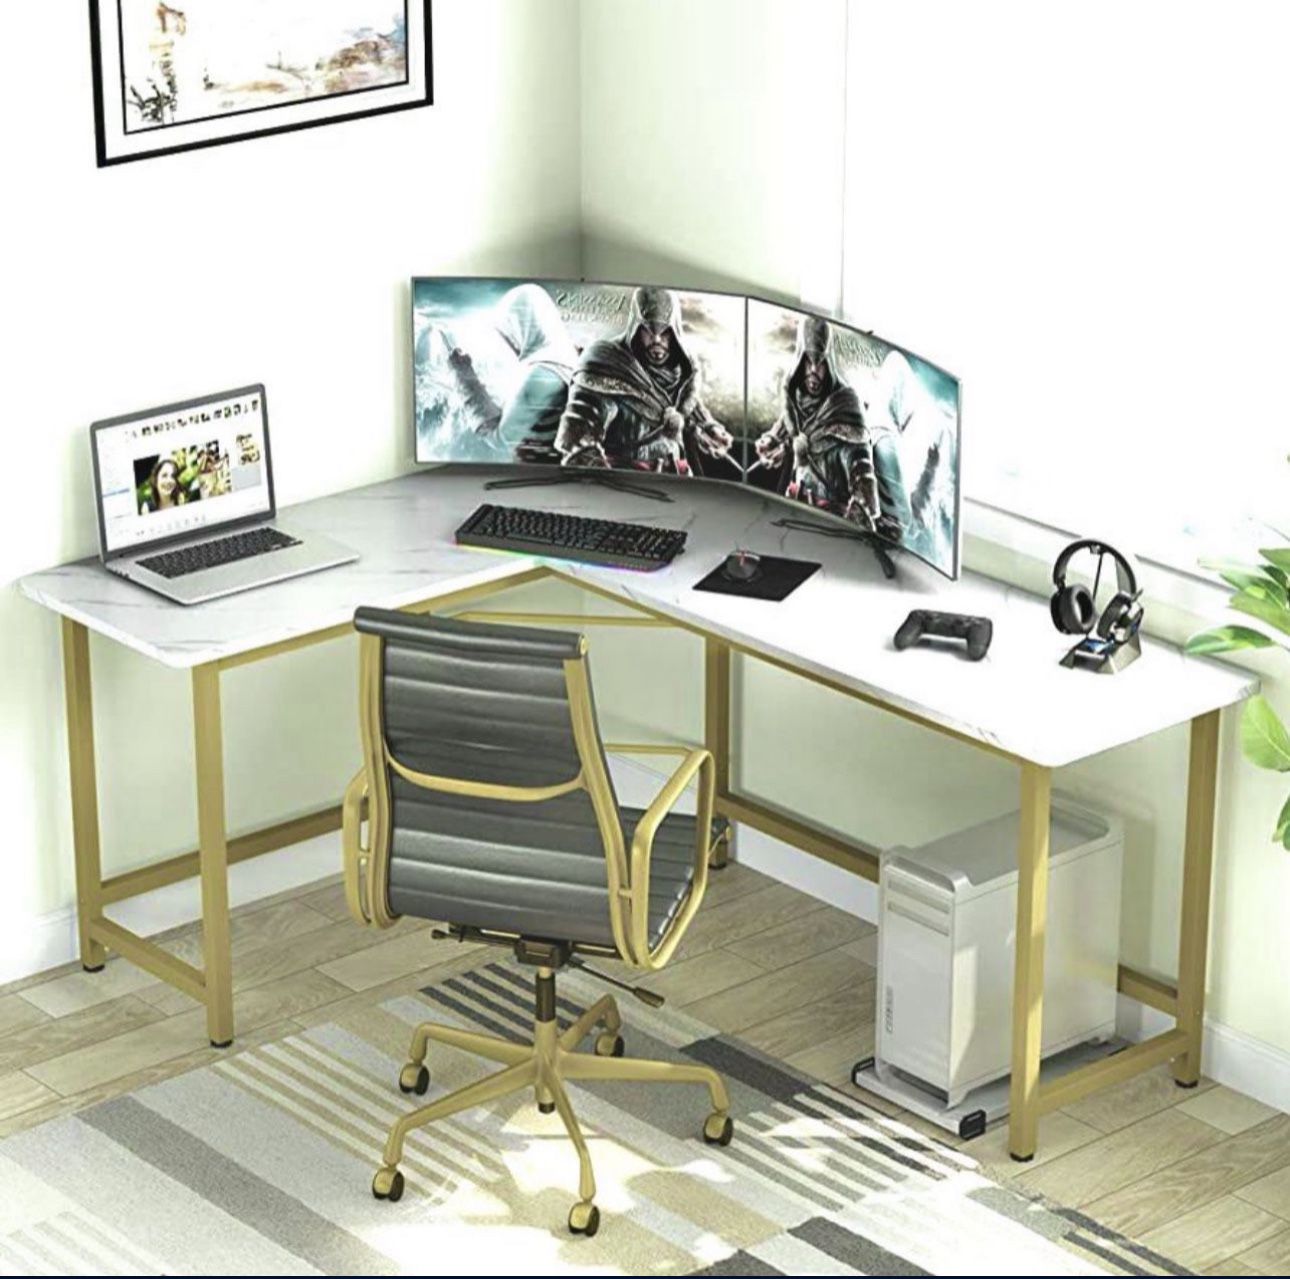  Dorriss Computer Desk,Home Office Desks, 47 Computer Table,  Writing Desk,Marble Desk,White and Gold Desk, White Faux Marble Desk,Gold  Metal Frame, White Desk,Marble Computer Desk for Home Office : Home &  Kitchen